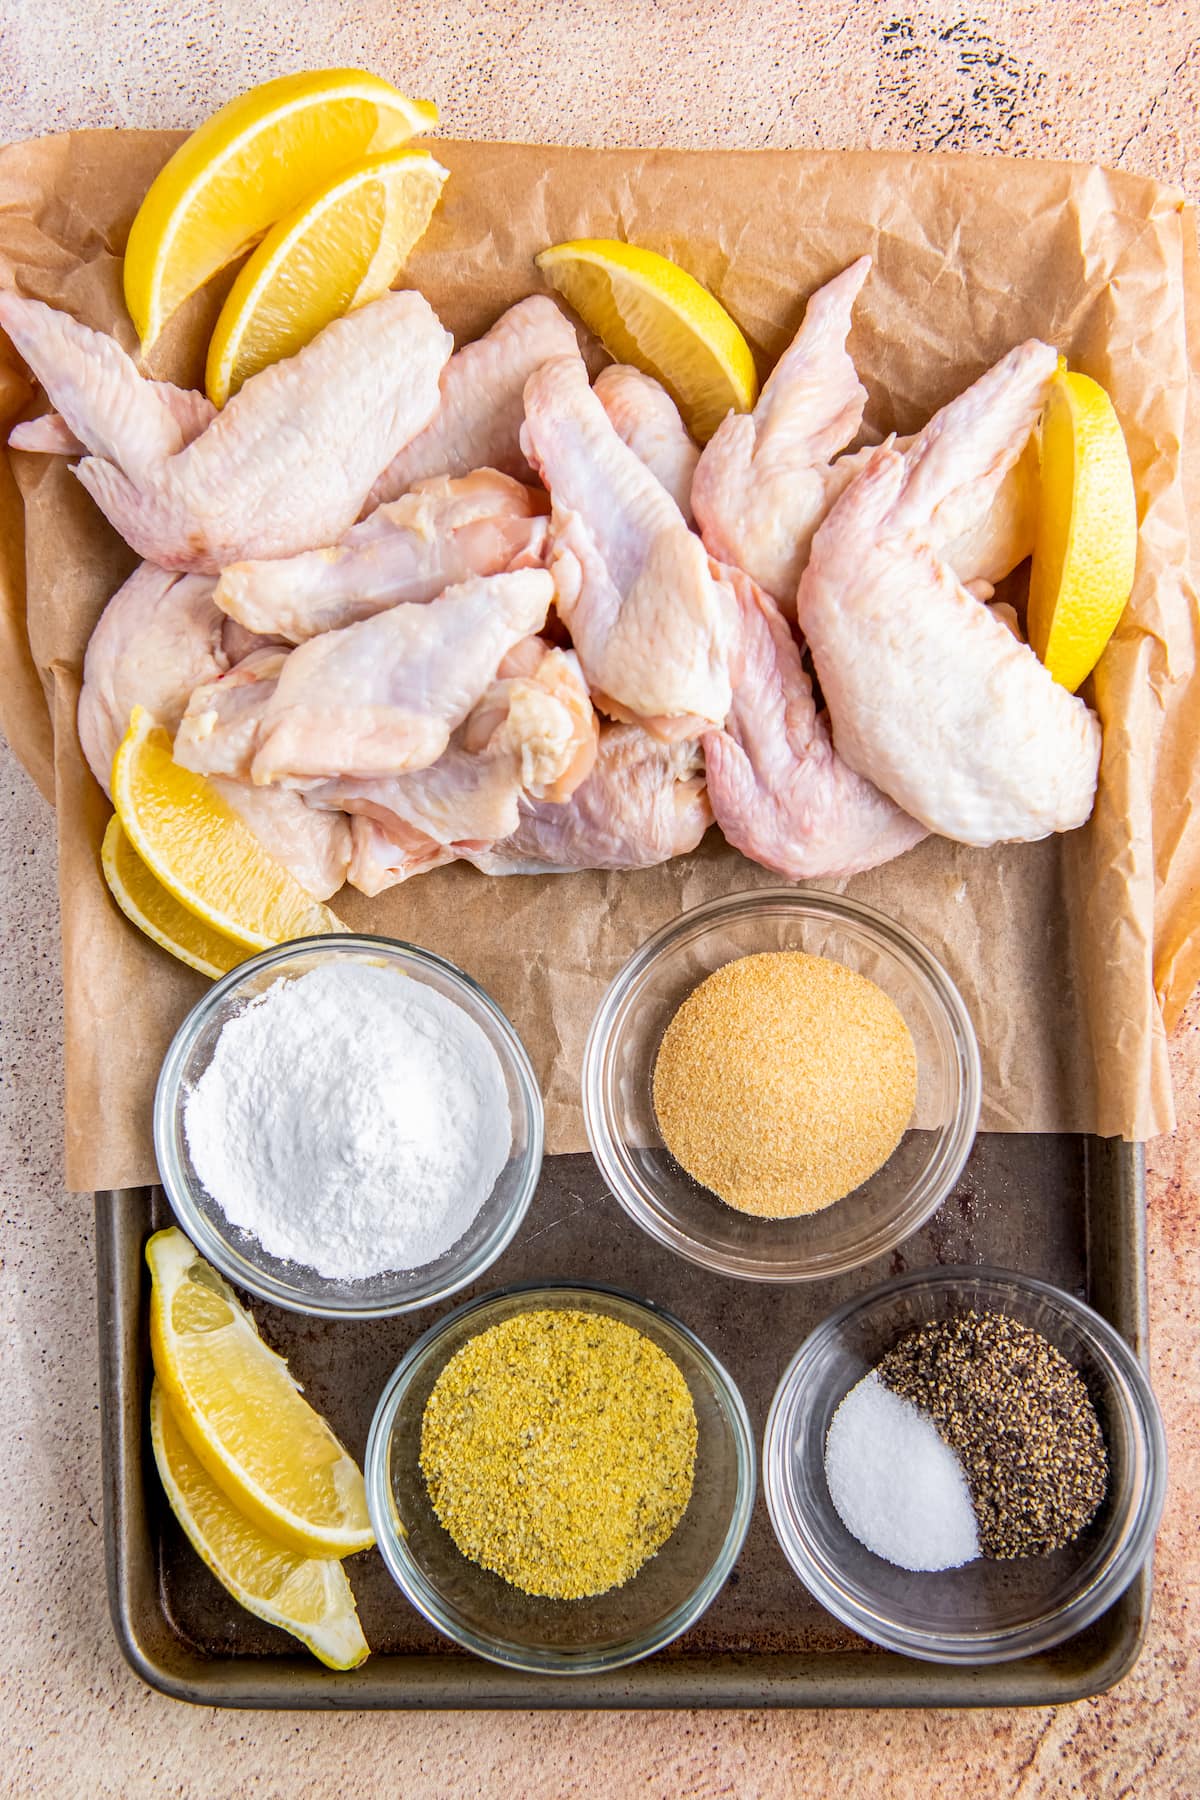 ingredients to make lemon pepper chicken wings like raw wings and seasonings on a sheet tray